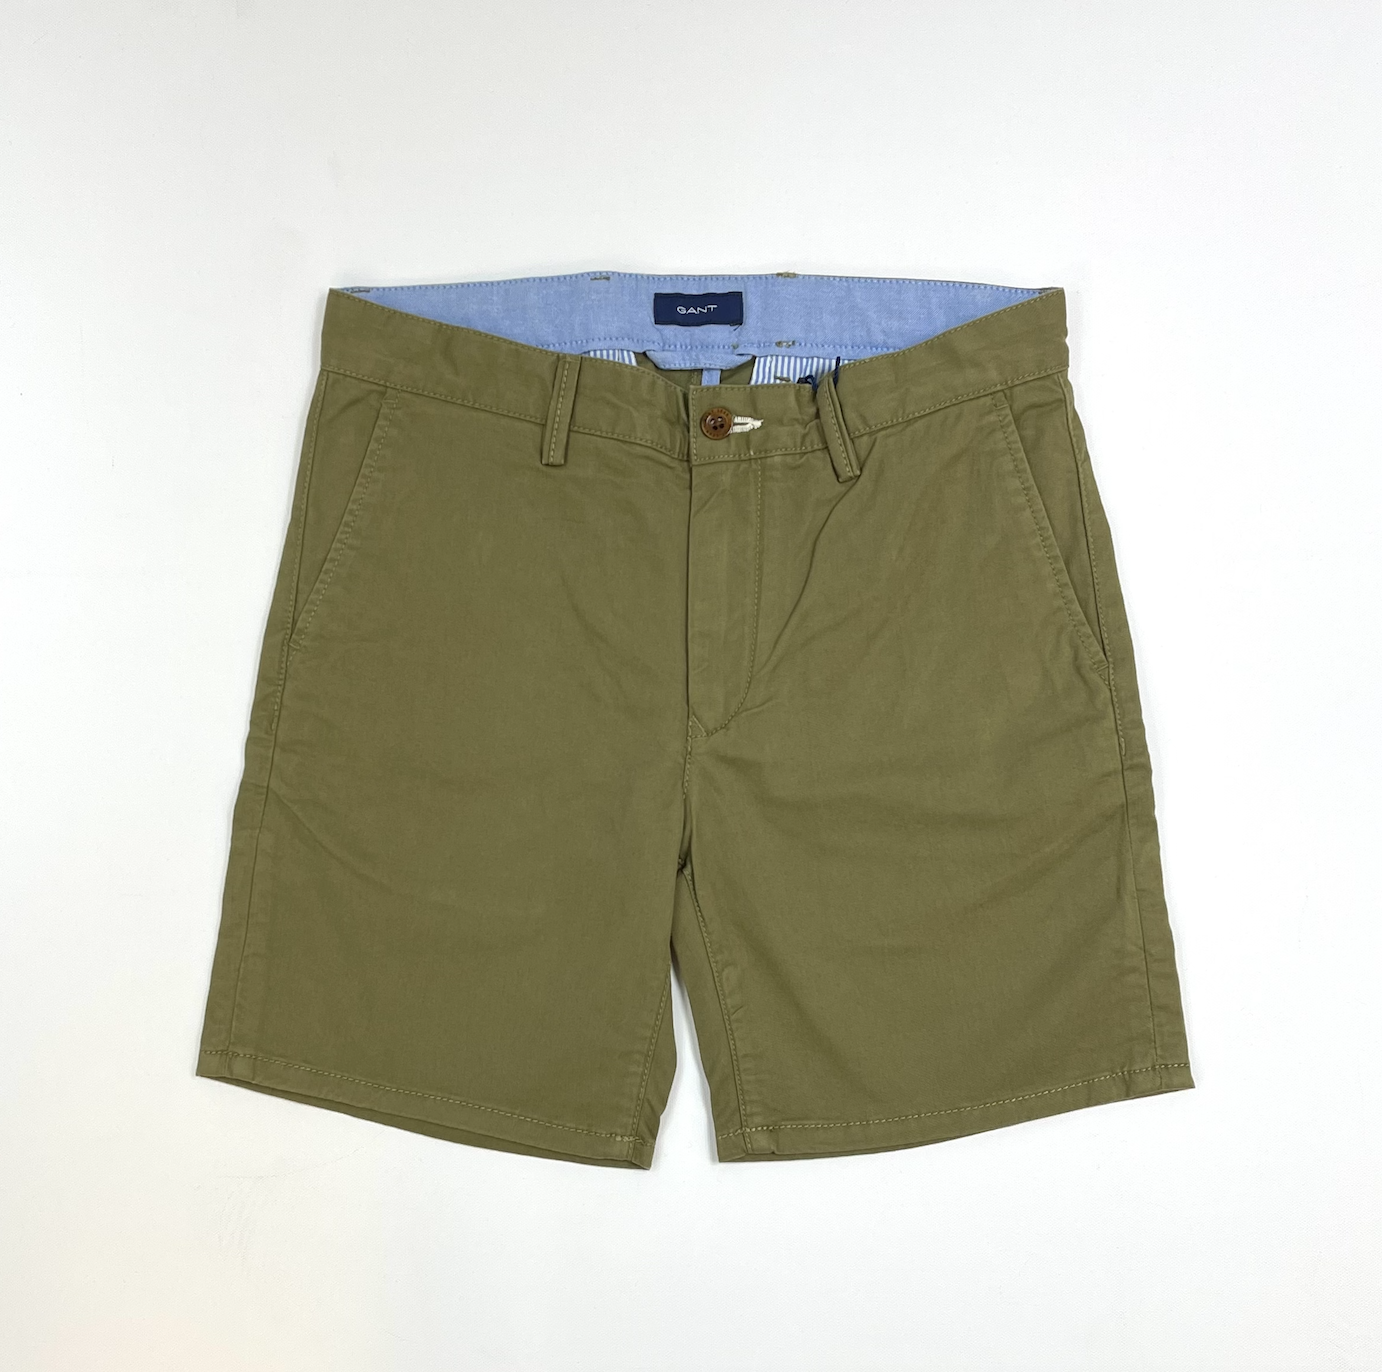 Shorts Chino Utility Green